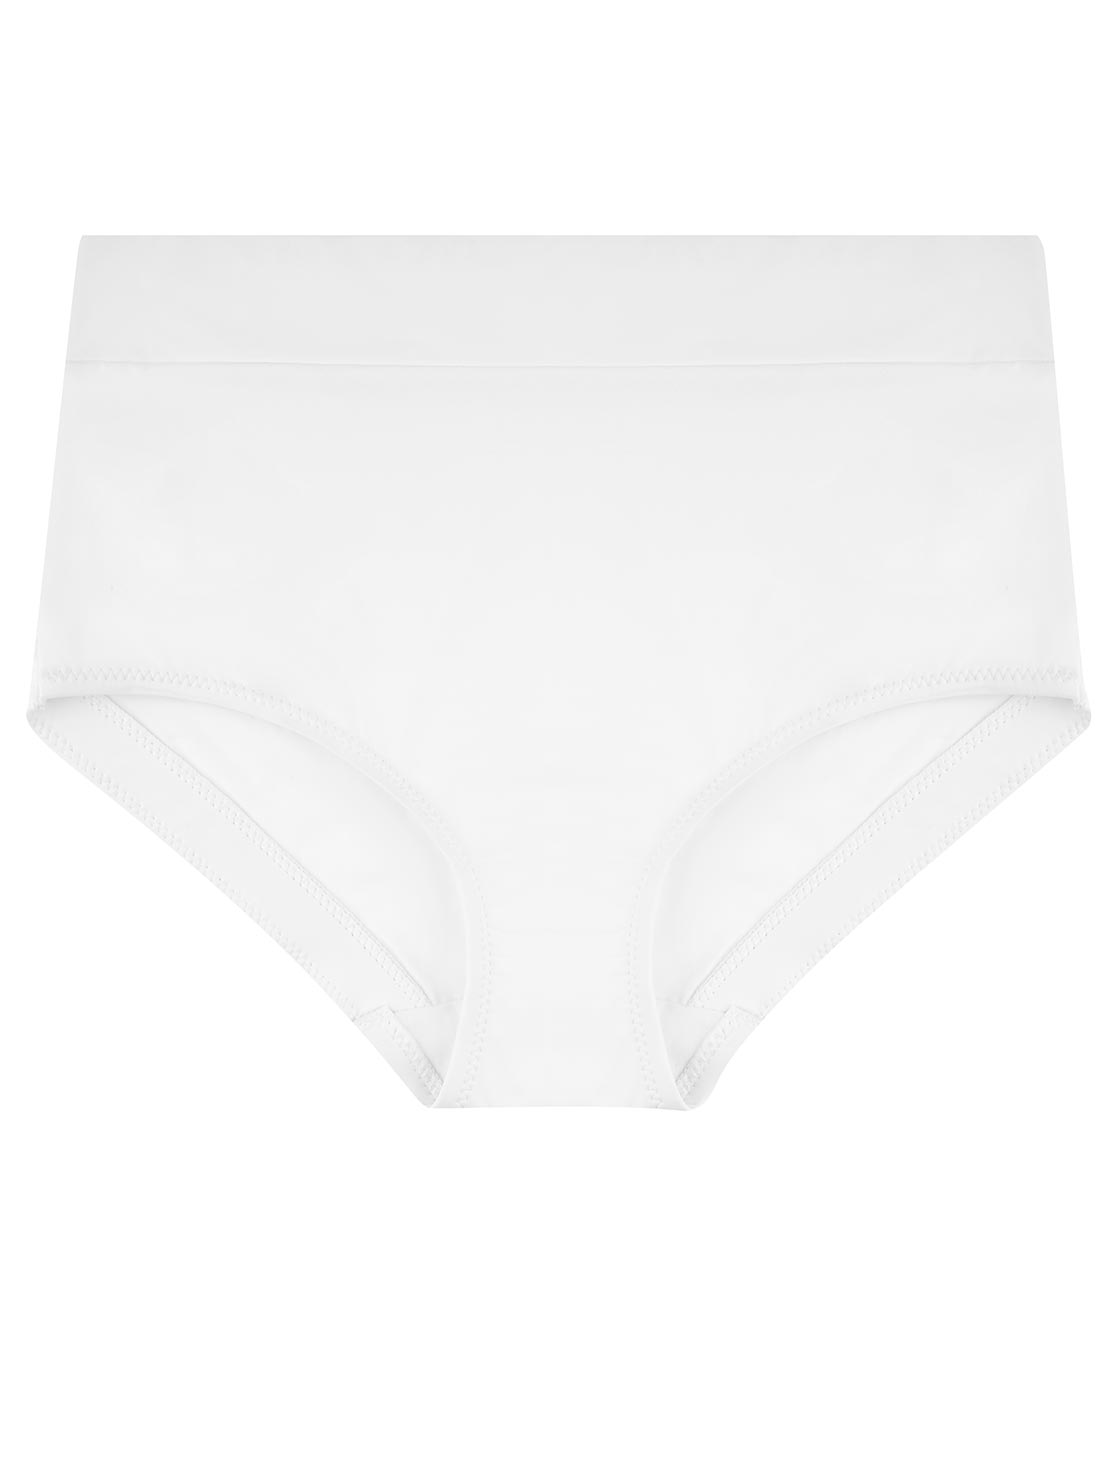 LAILAIJU Ladies Nylon Panties with Cotton Crotch Waist Of Pure